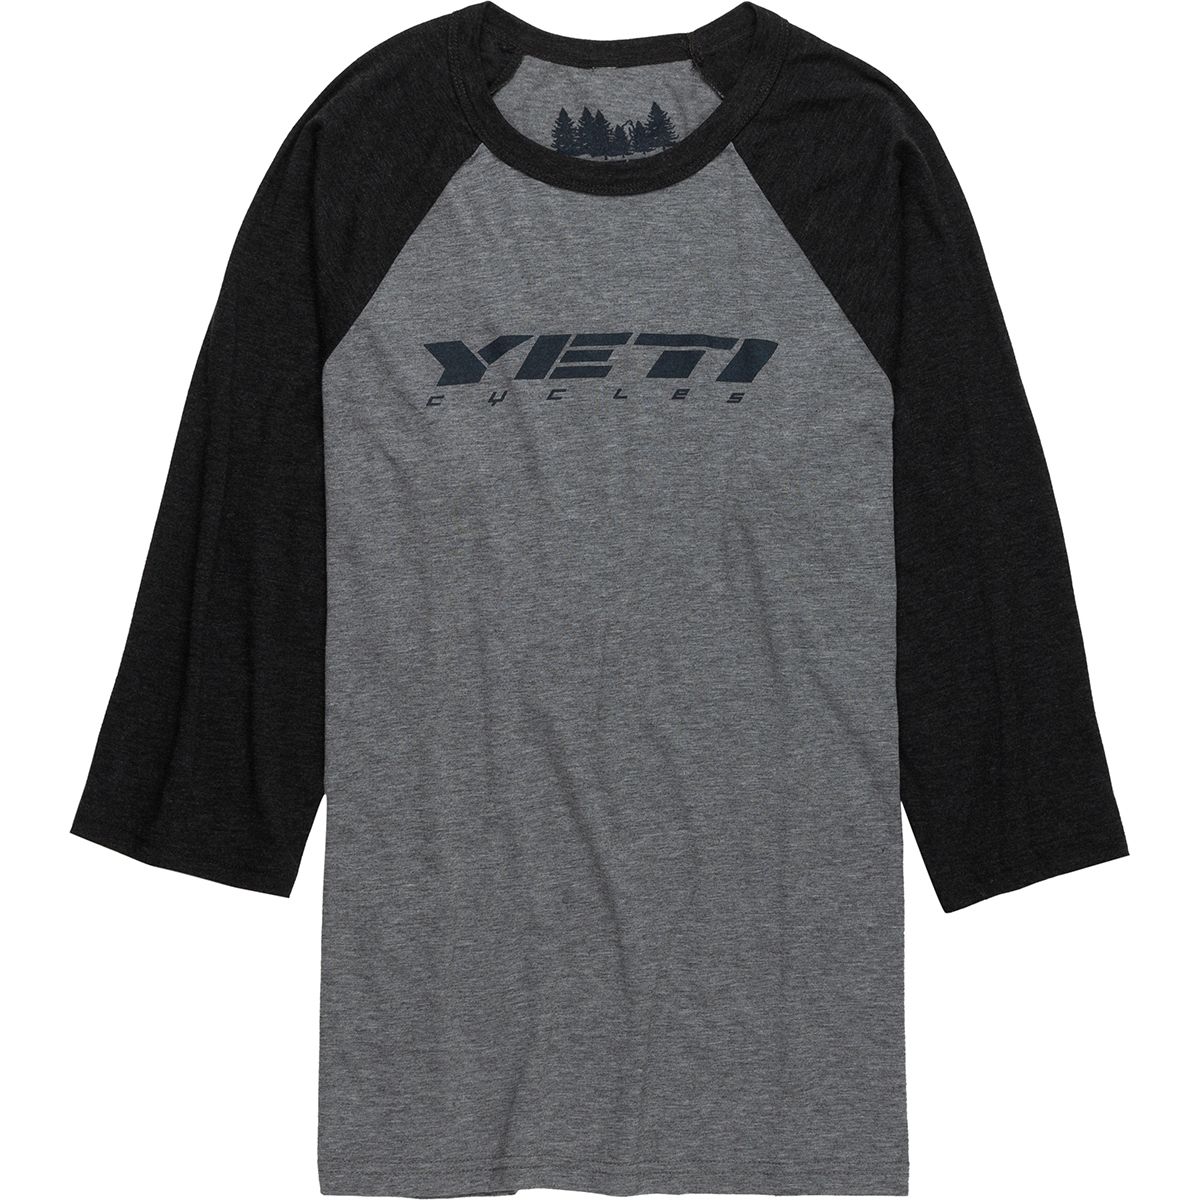 Yeti Cycles Baseball T-Shirt - Men's